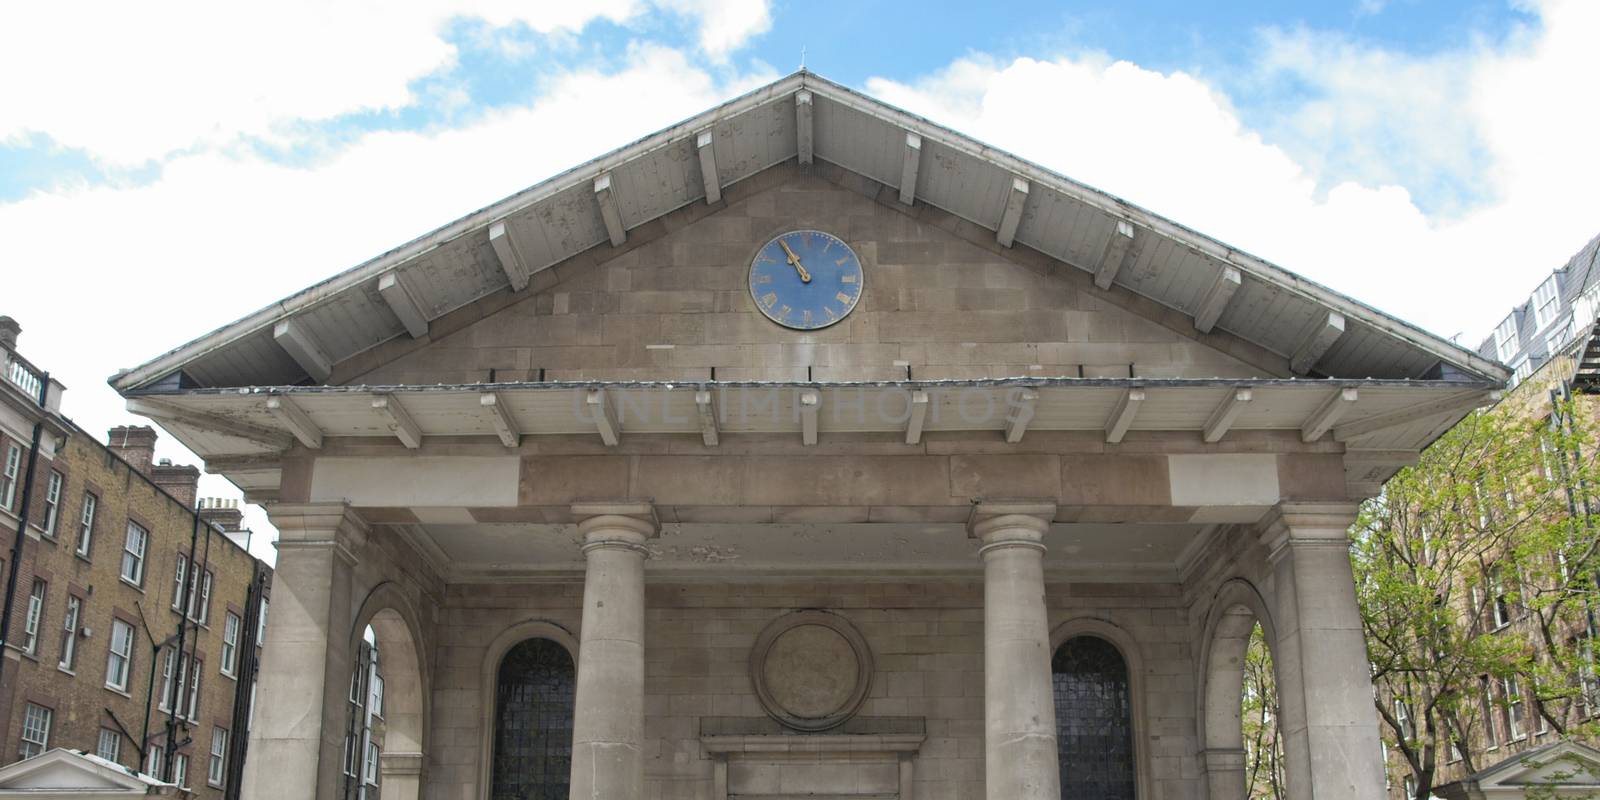 Saint Paul church in Covent Garden, London, UK